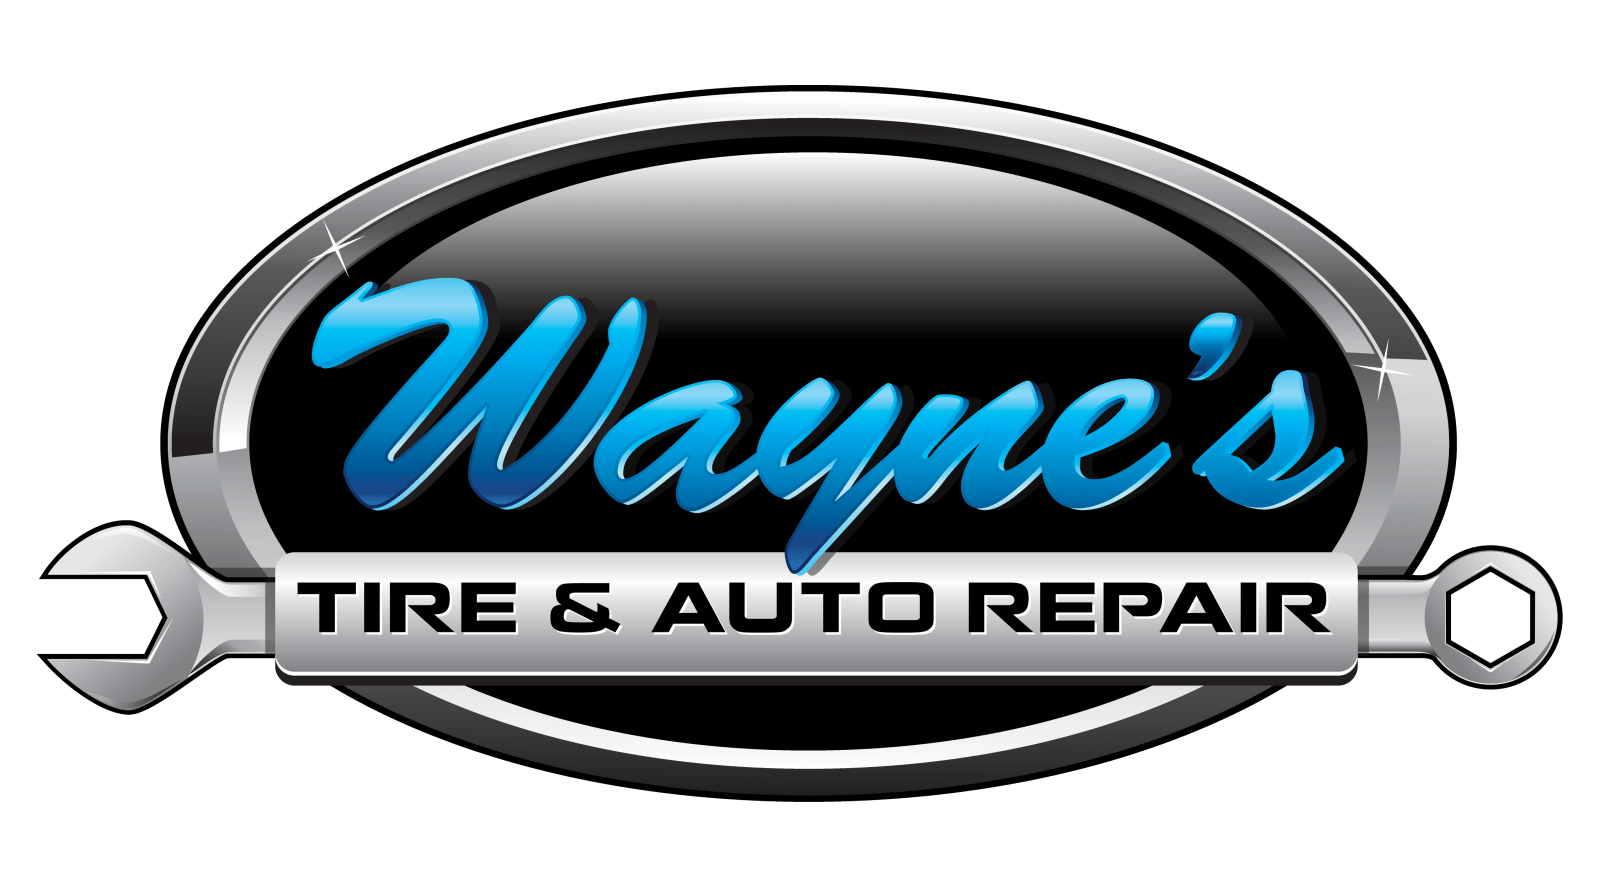 Cool Auto Repair Logo - Night Drop. Wayne's Tire & Auto Repair